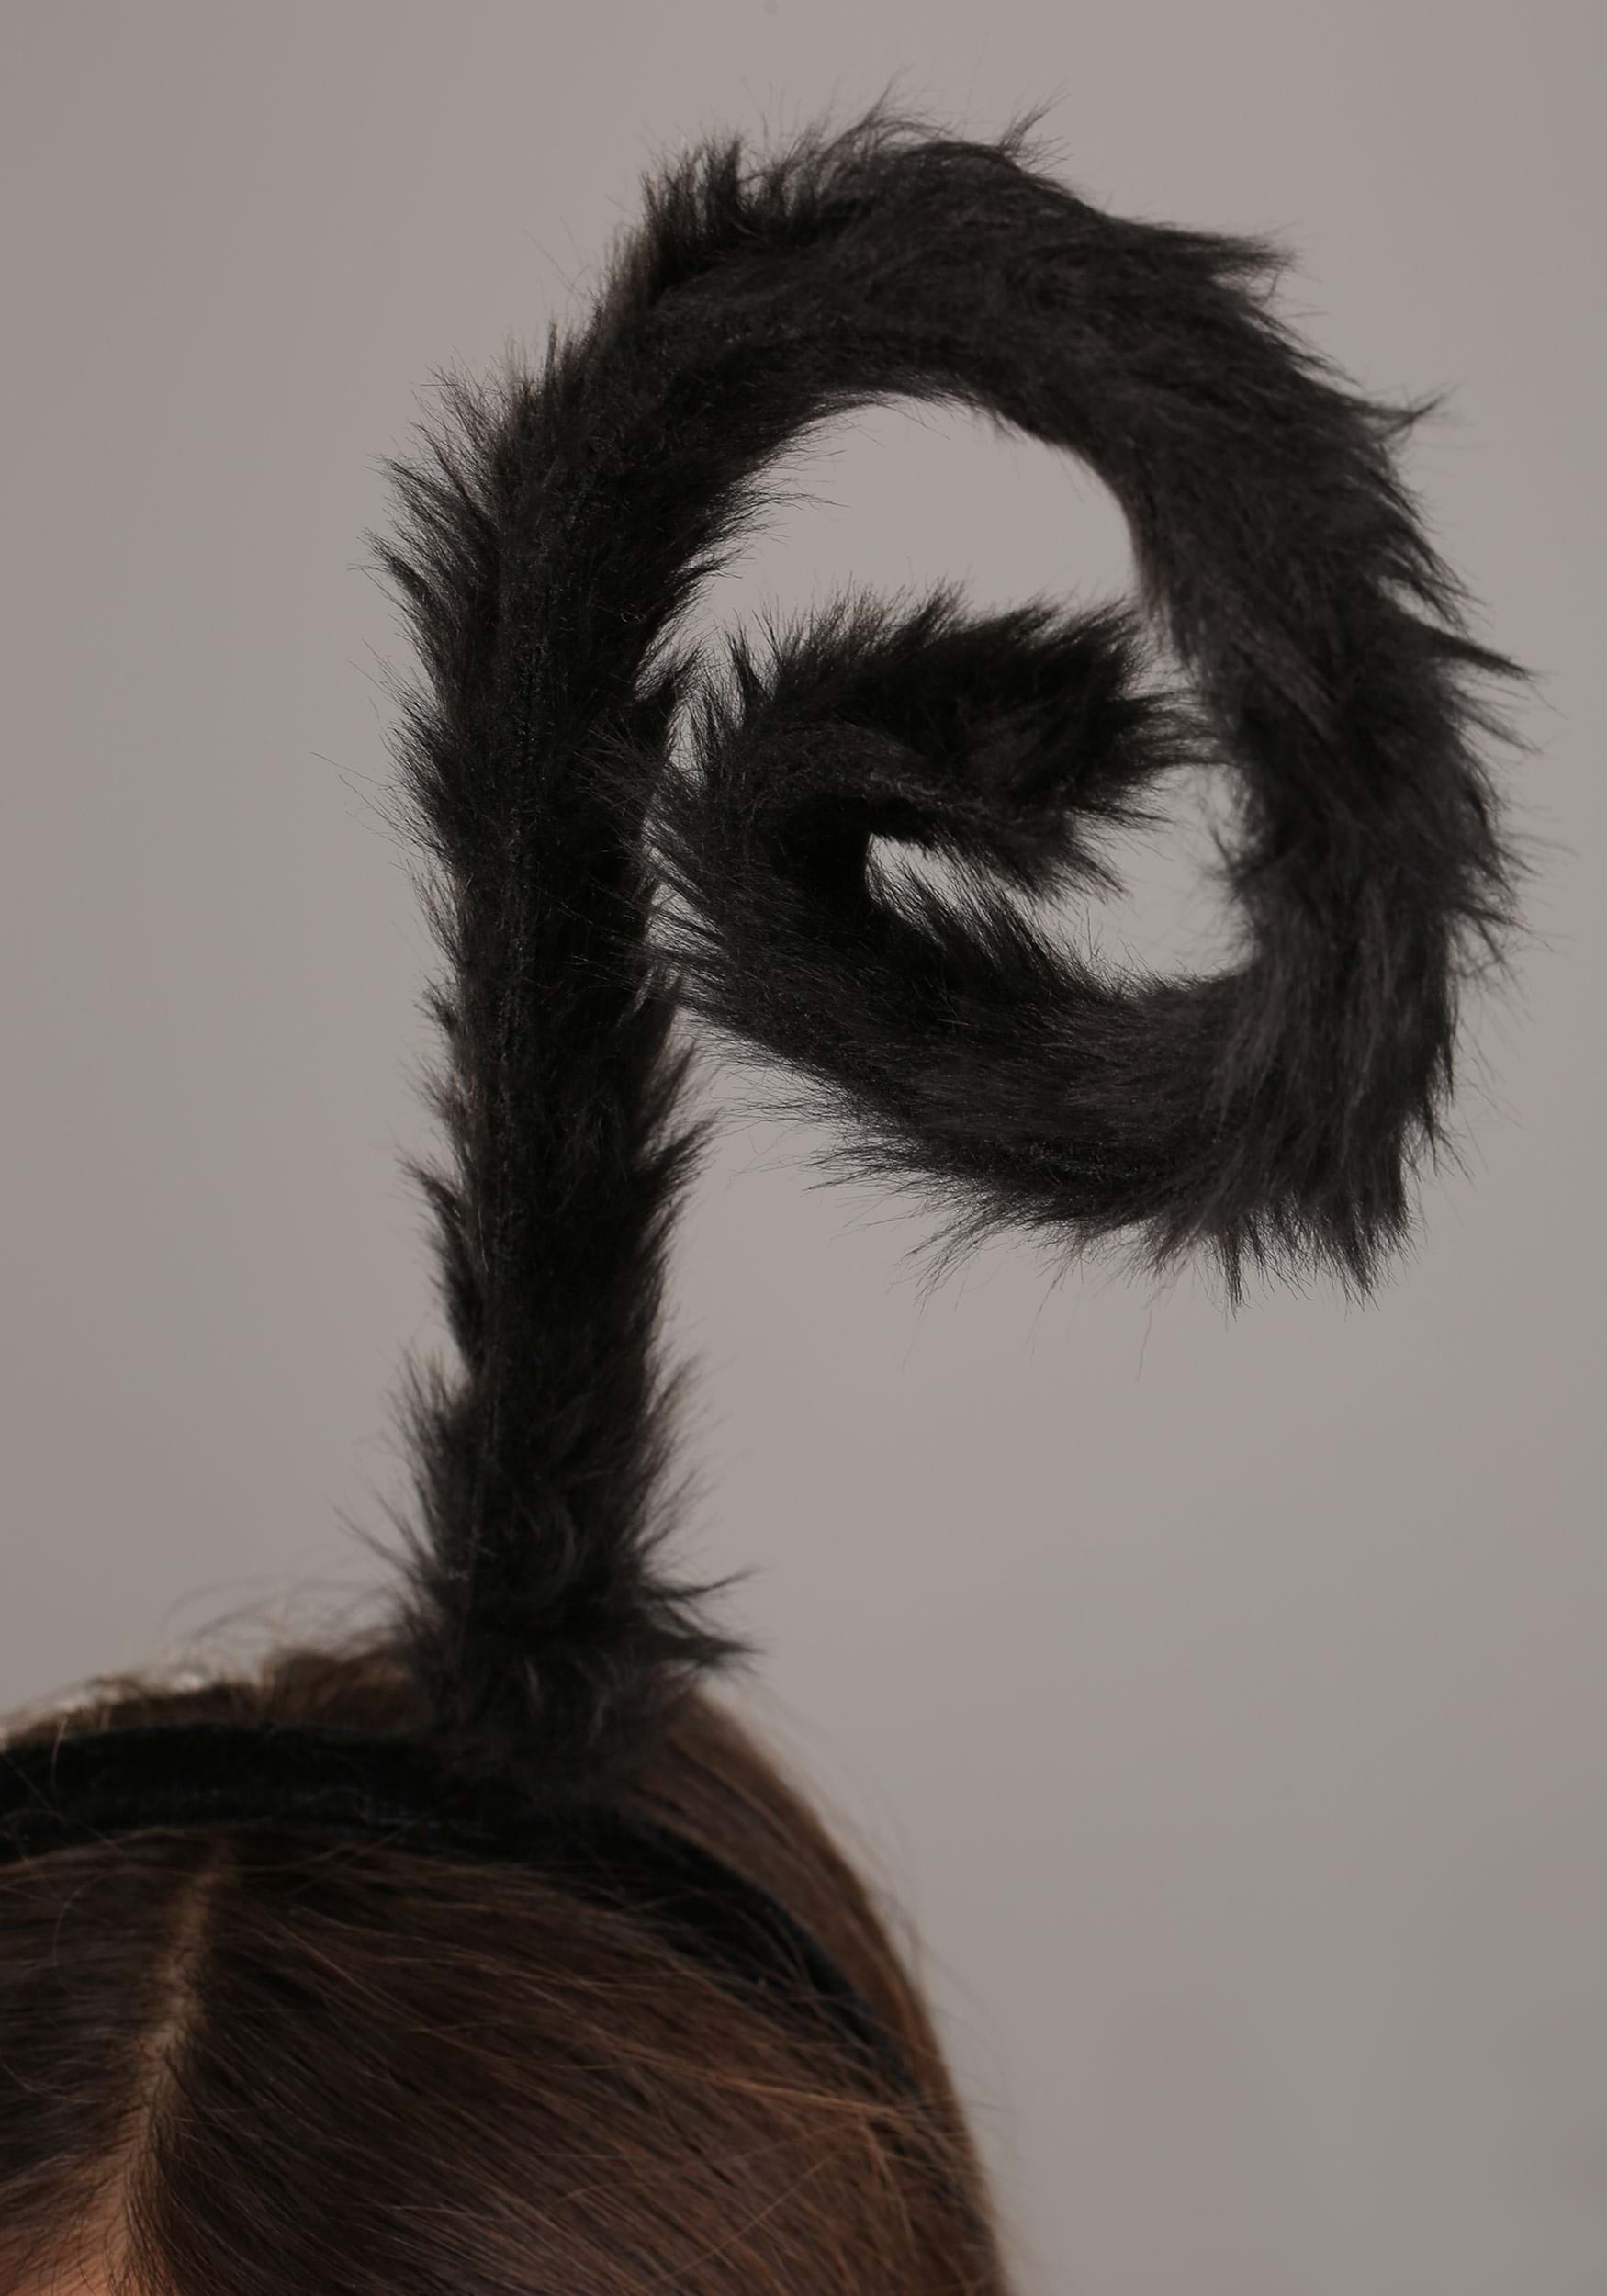 Fuzzy Antenna Costume Headband